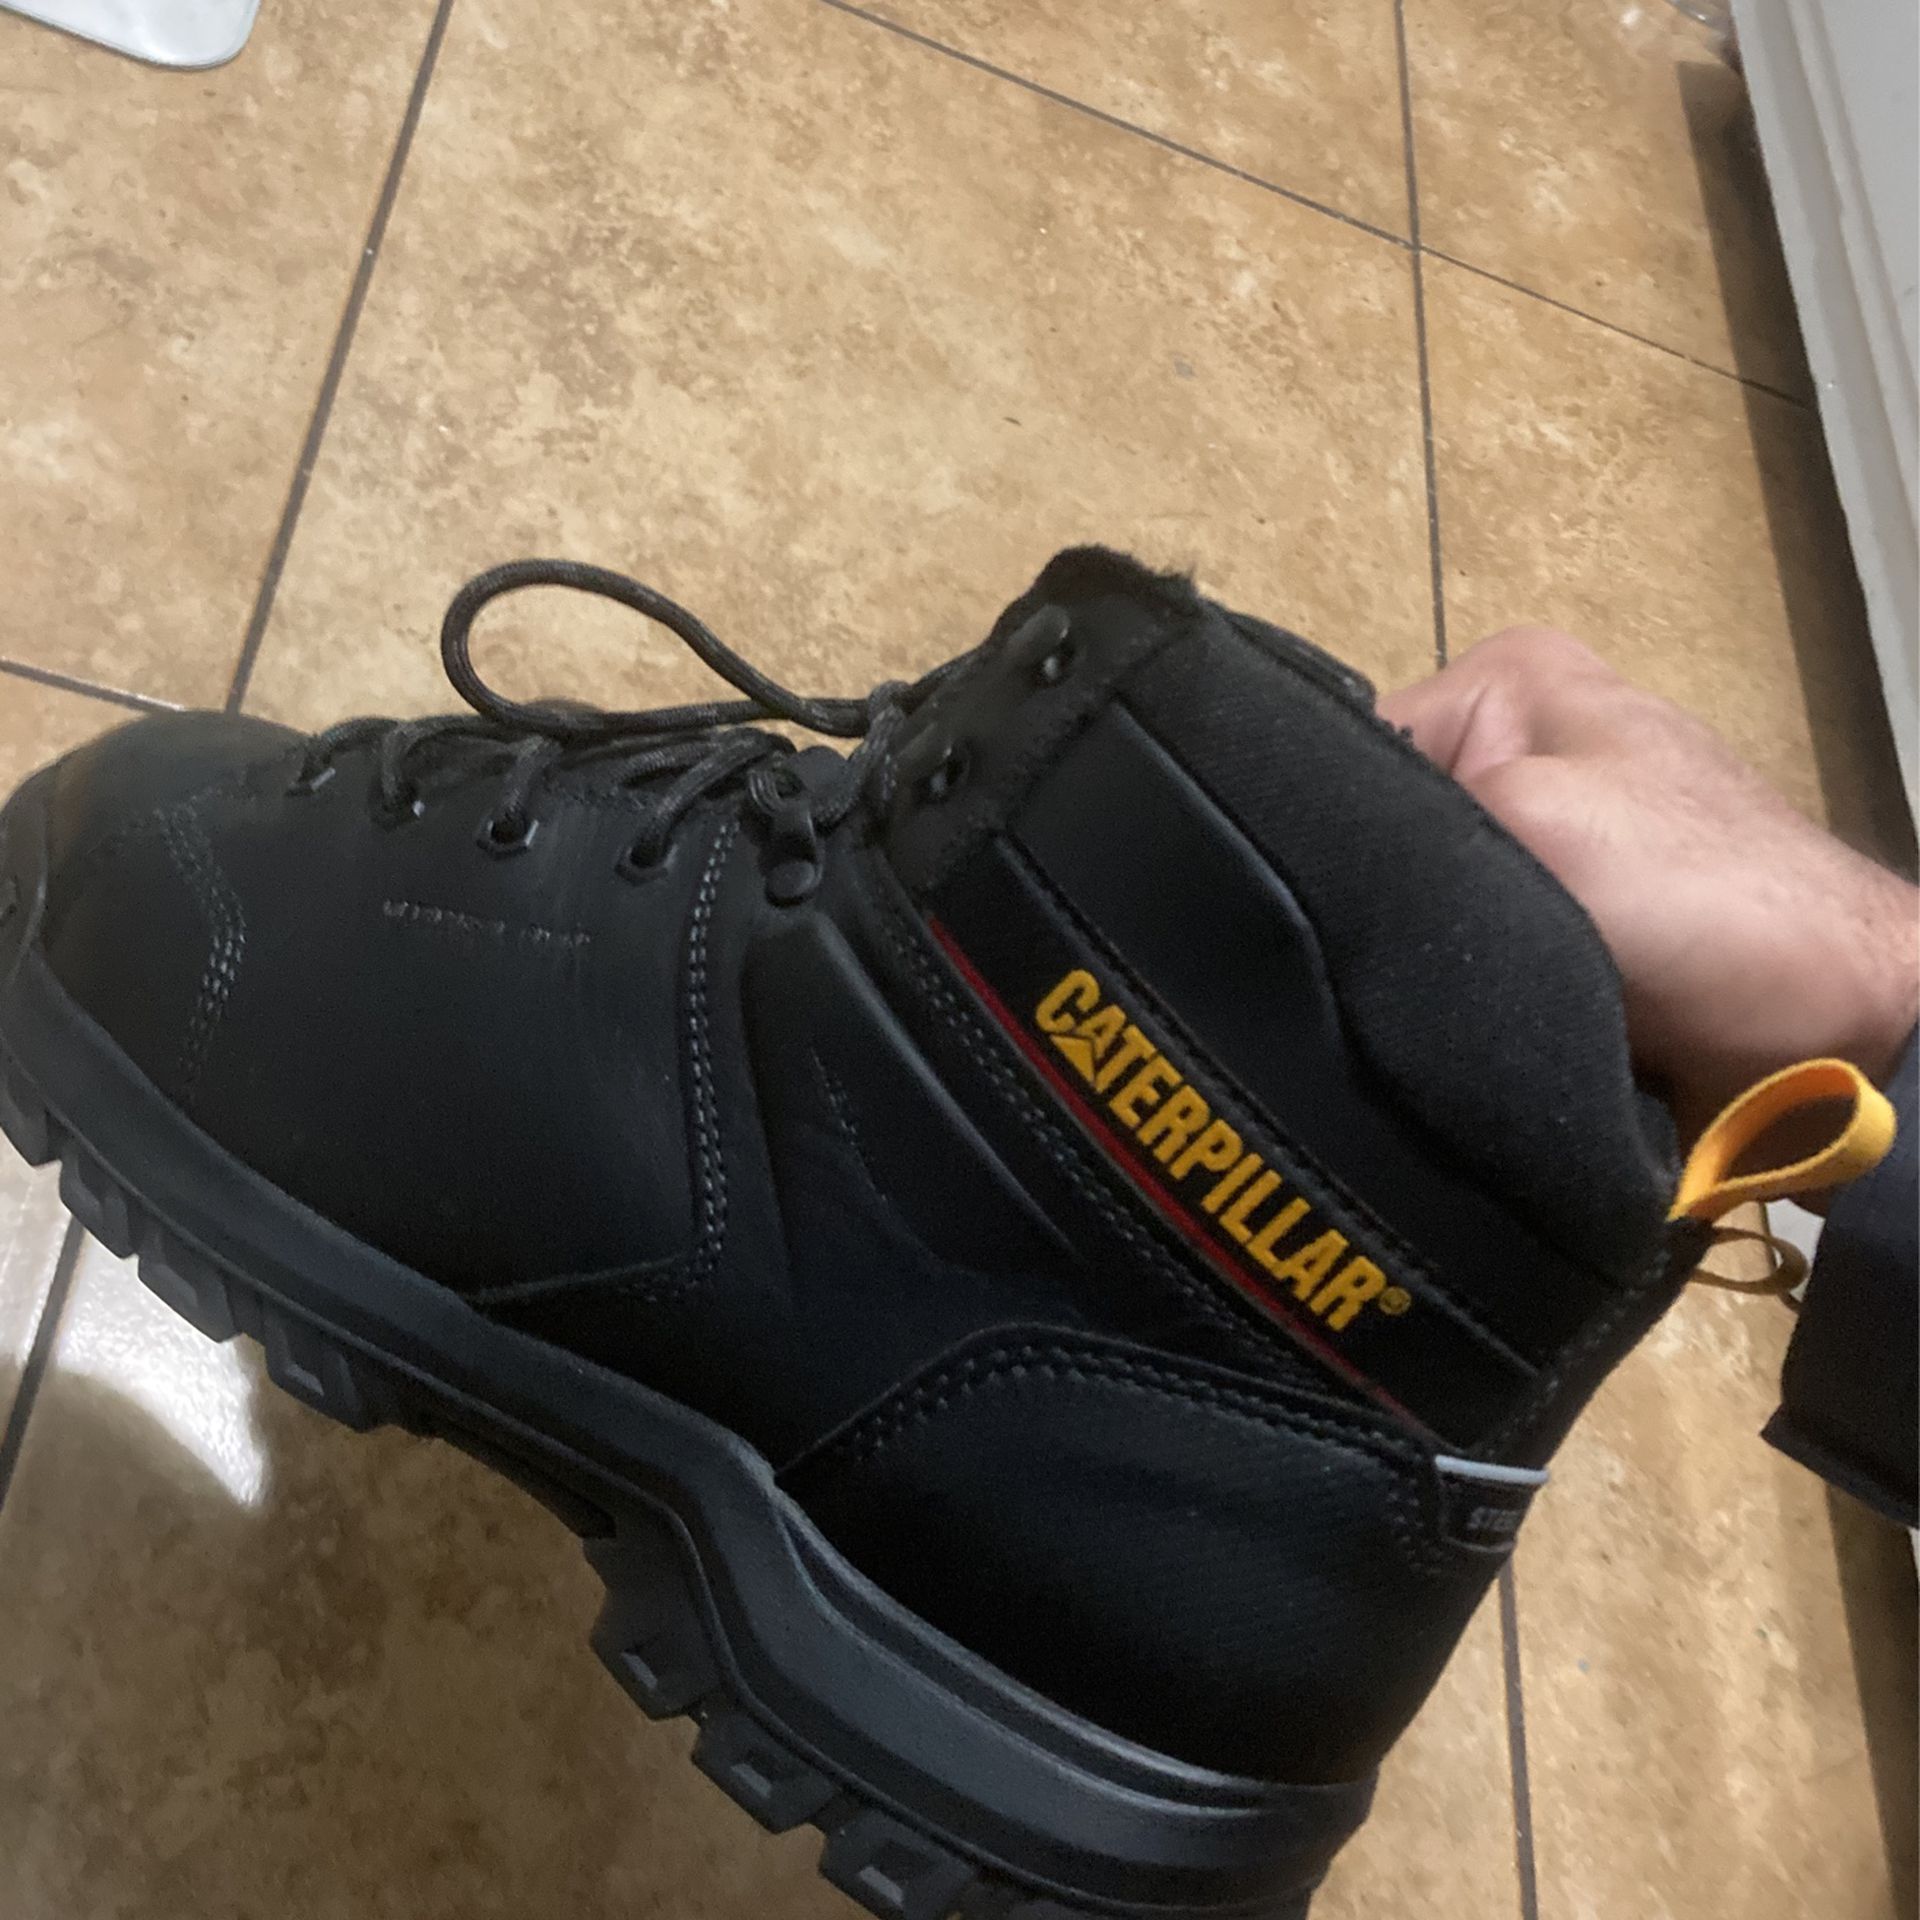 Caterpillar Waterproof Steel Toe Work Boots Size 11.5